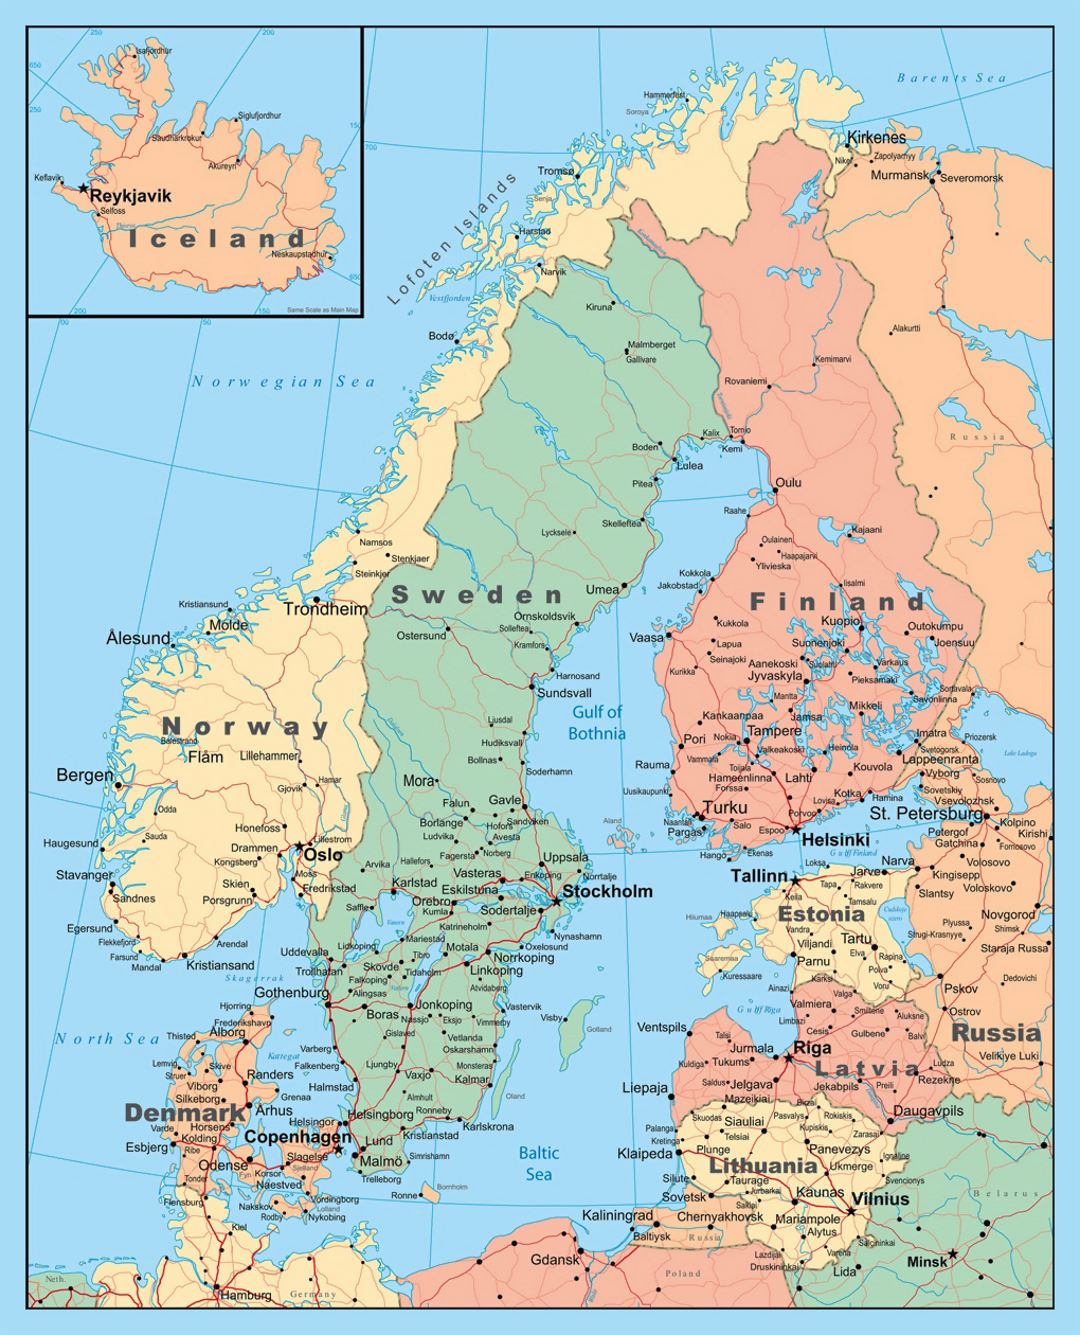 Mapa político detallada de Escandinavia